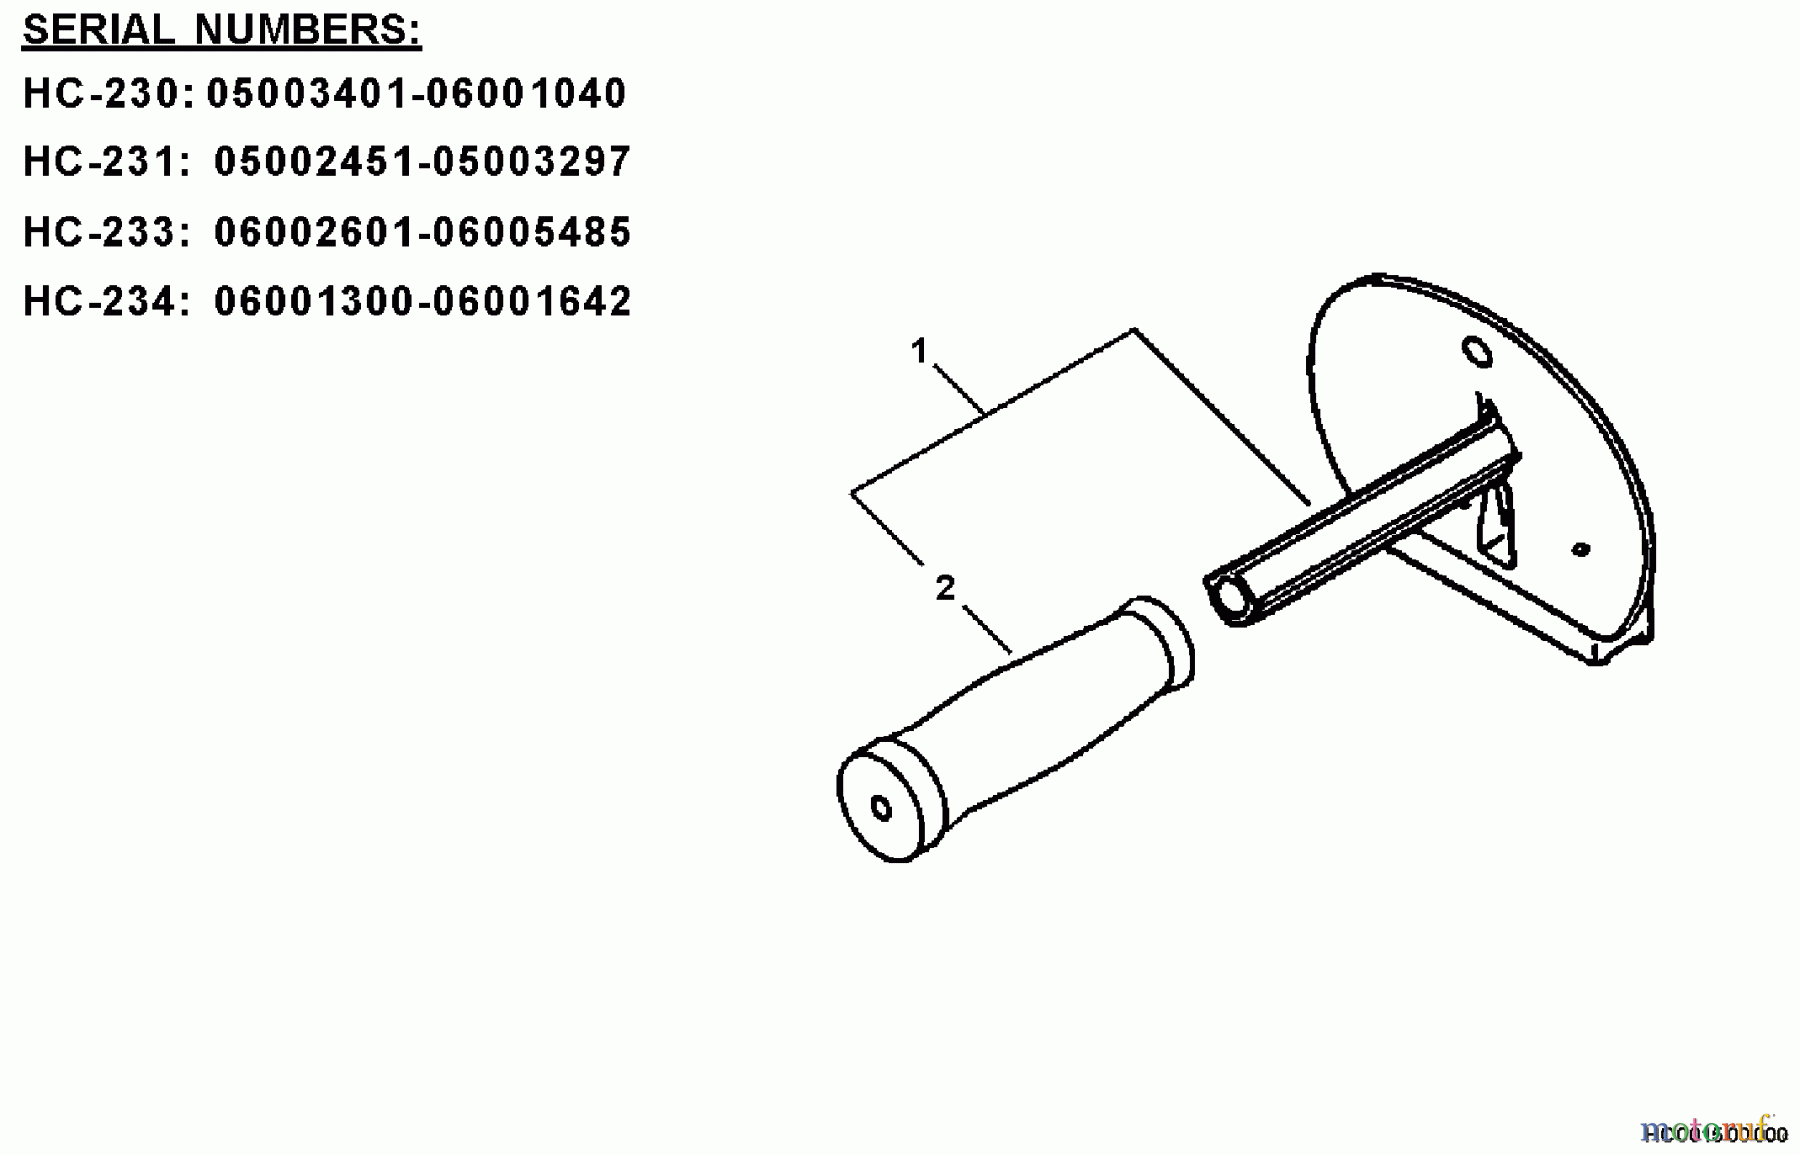  Echo Heckenscheren HC-230 - Echo Hedge Trimmer, S/N: 06001001 - 06999999 Side Handle  S/N: 06001001 - 06001040